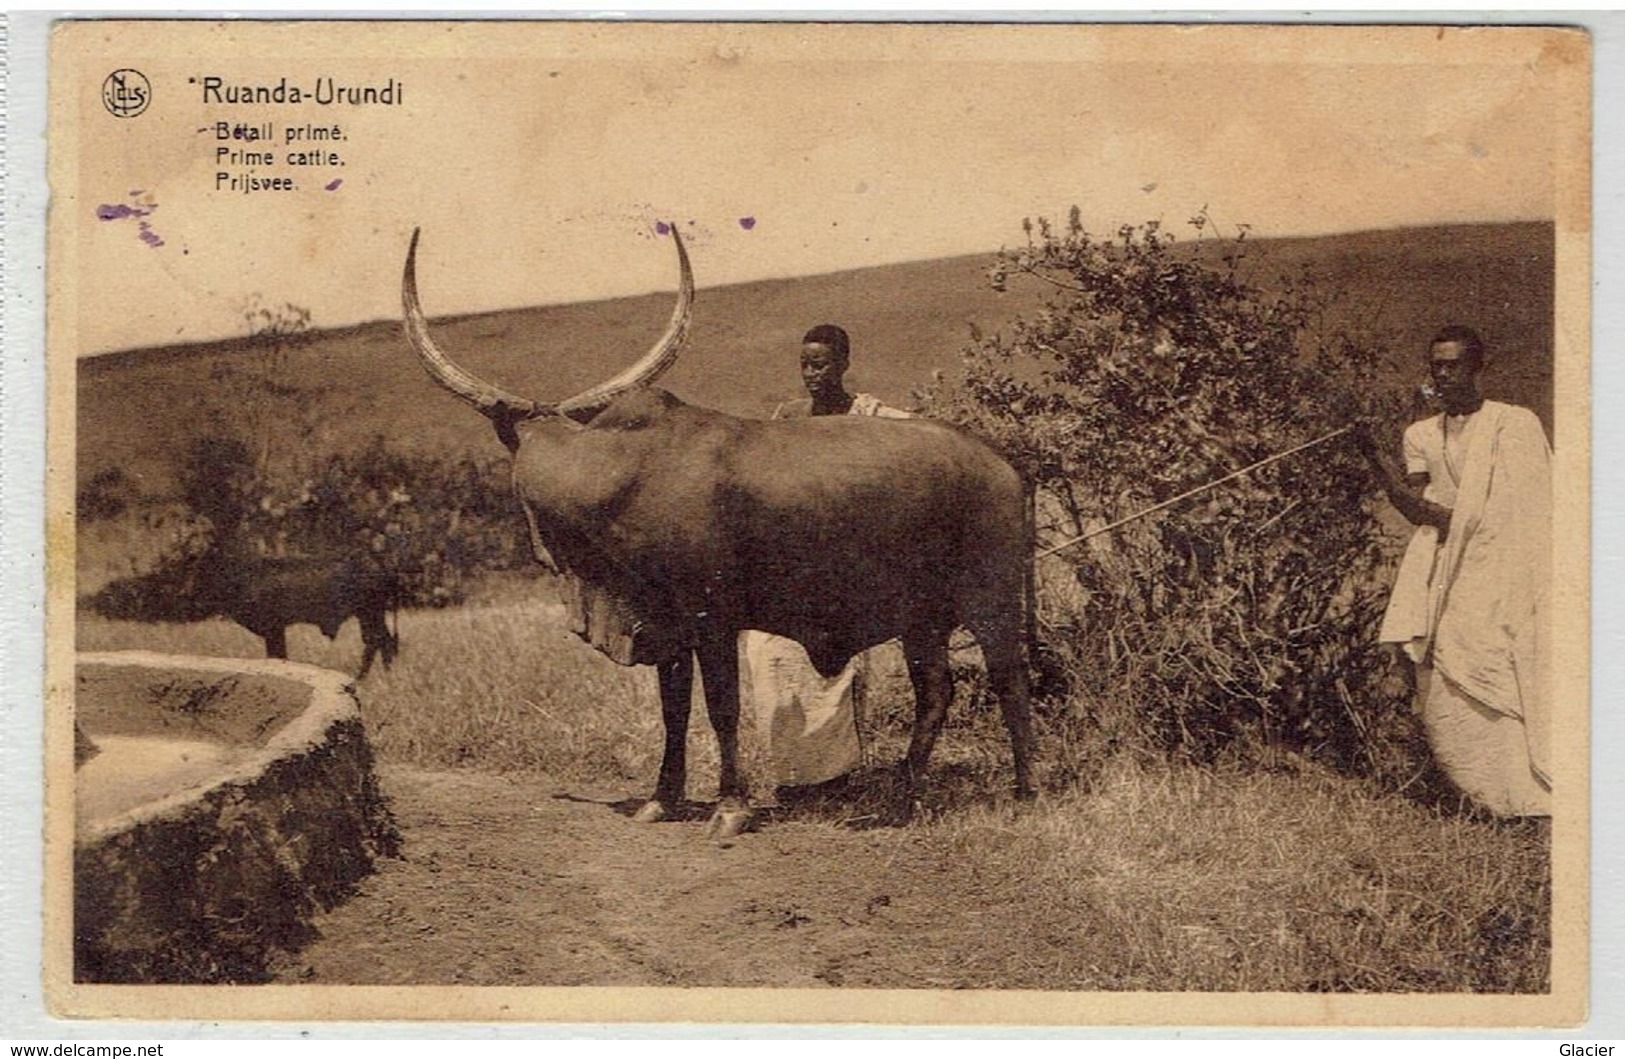 RUANDA-URUNDI - Bétail Primé - Prijsvee - Prime Cattle - Ruanda-Urundi